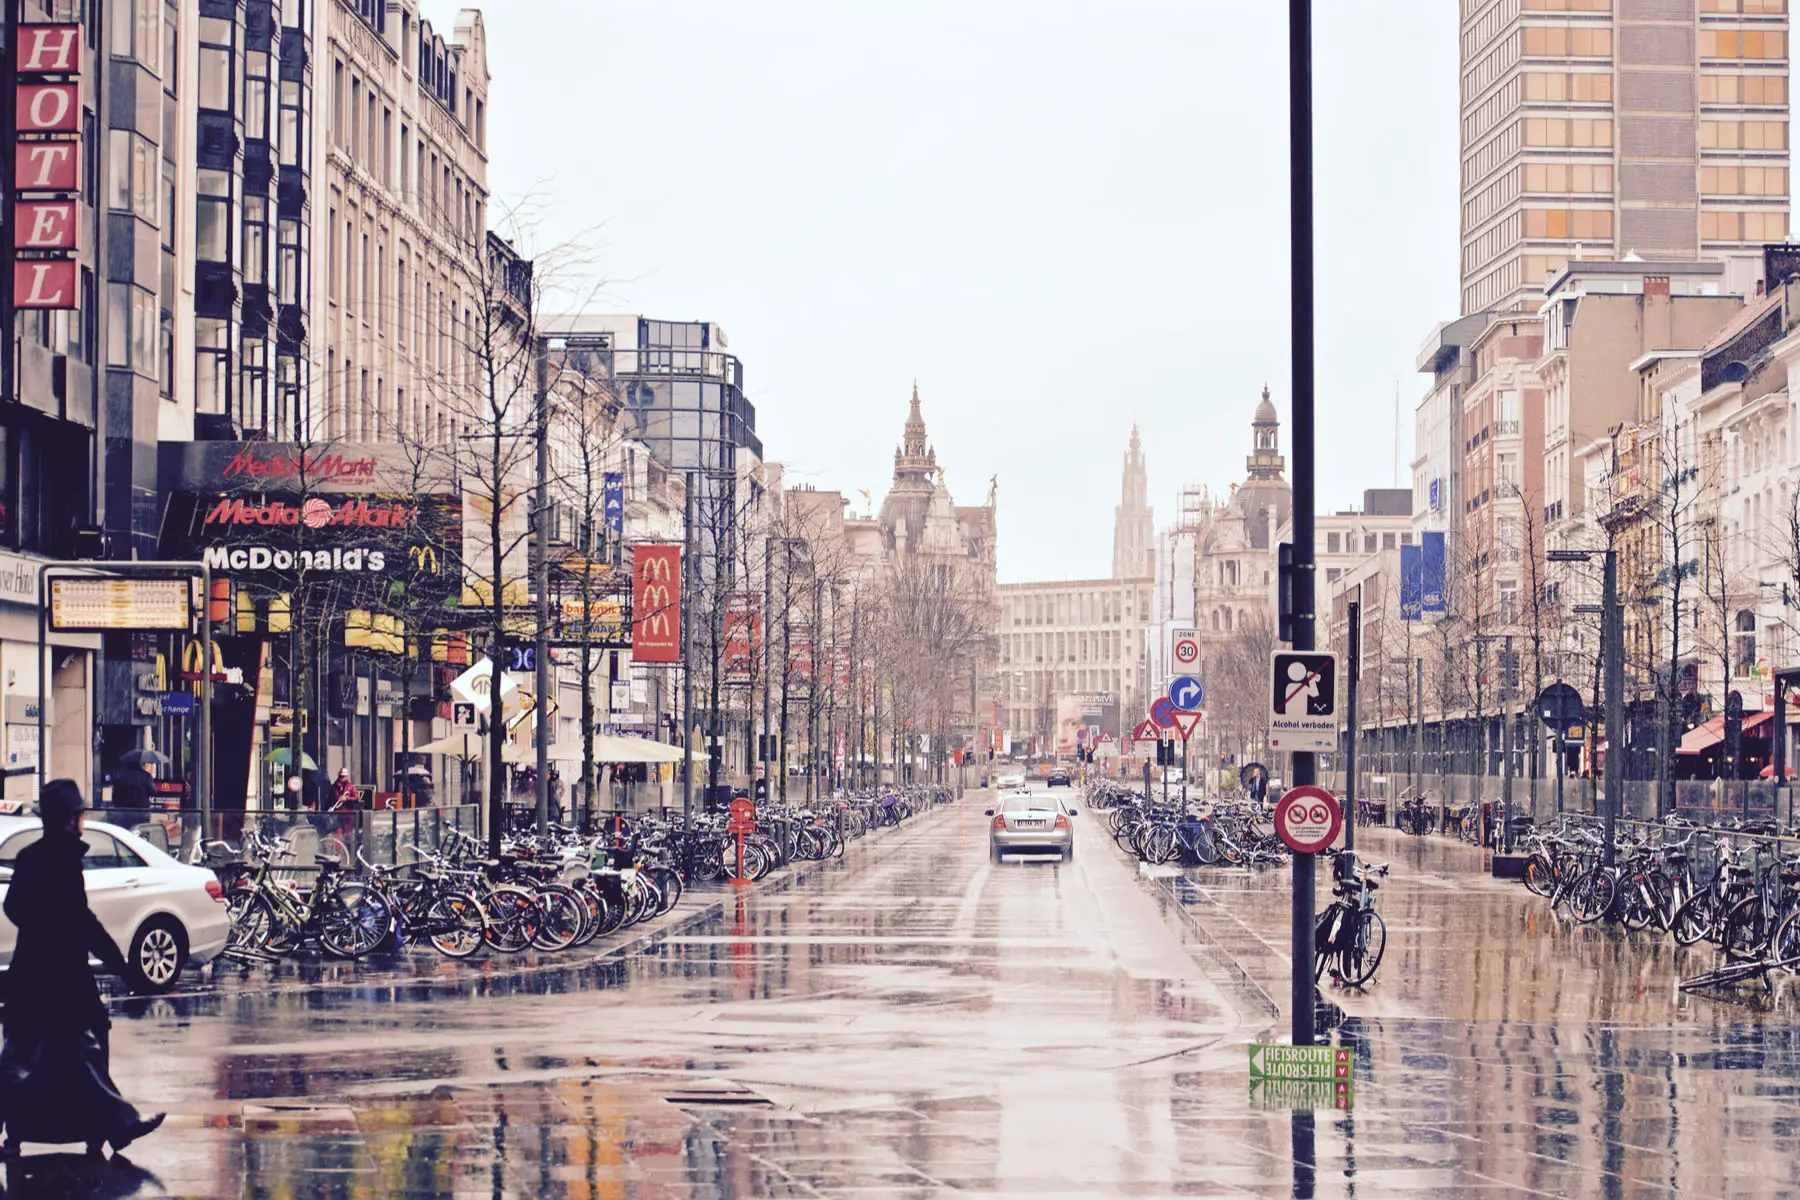 A Brussels, Belgium street in the rain